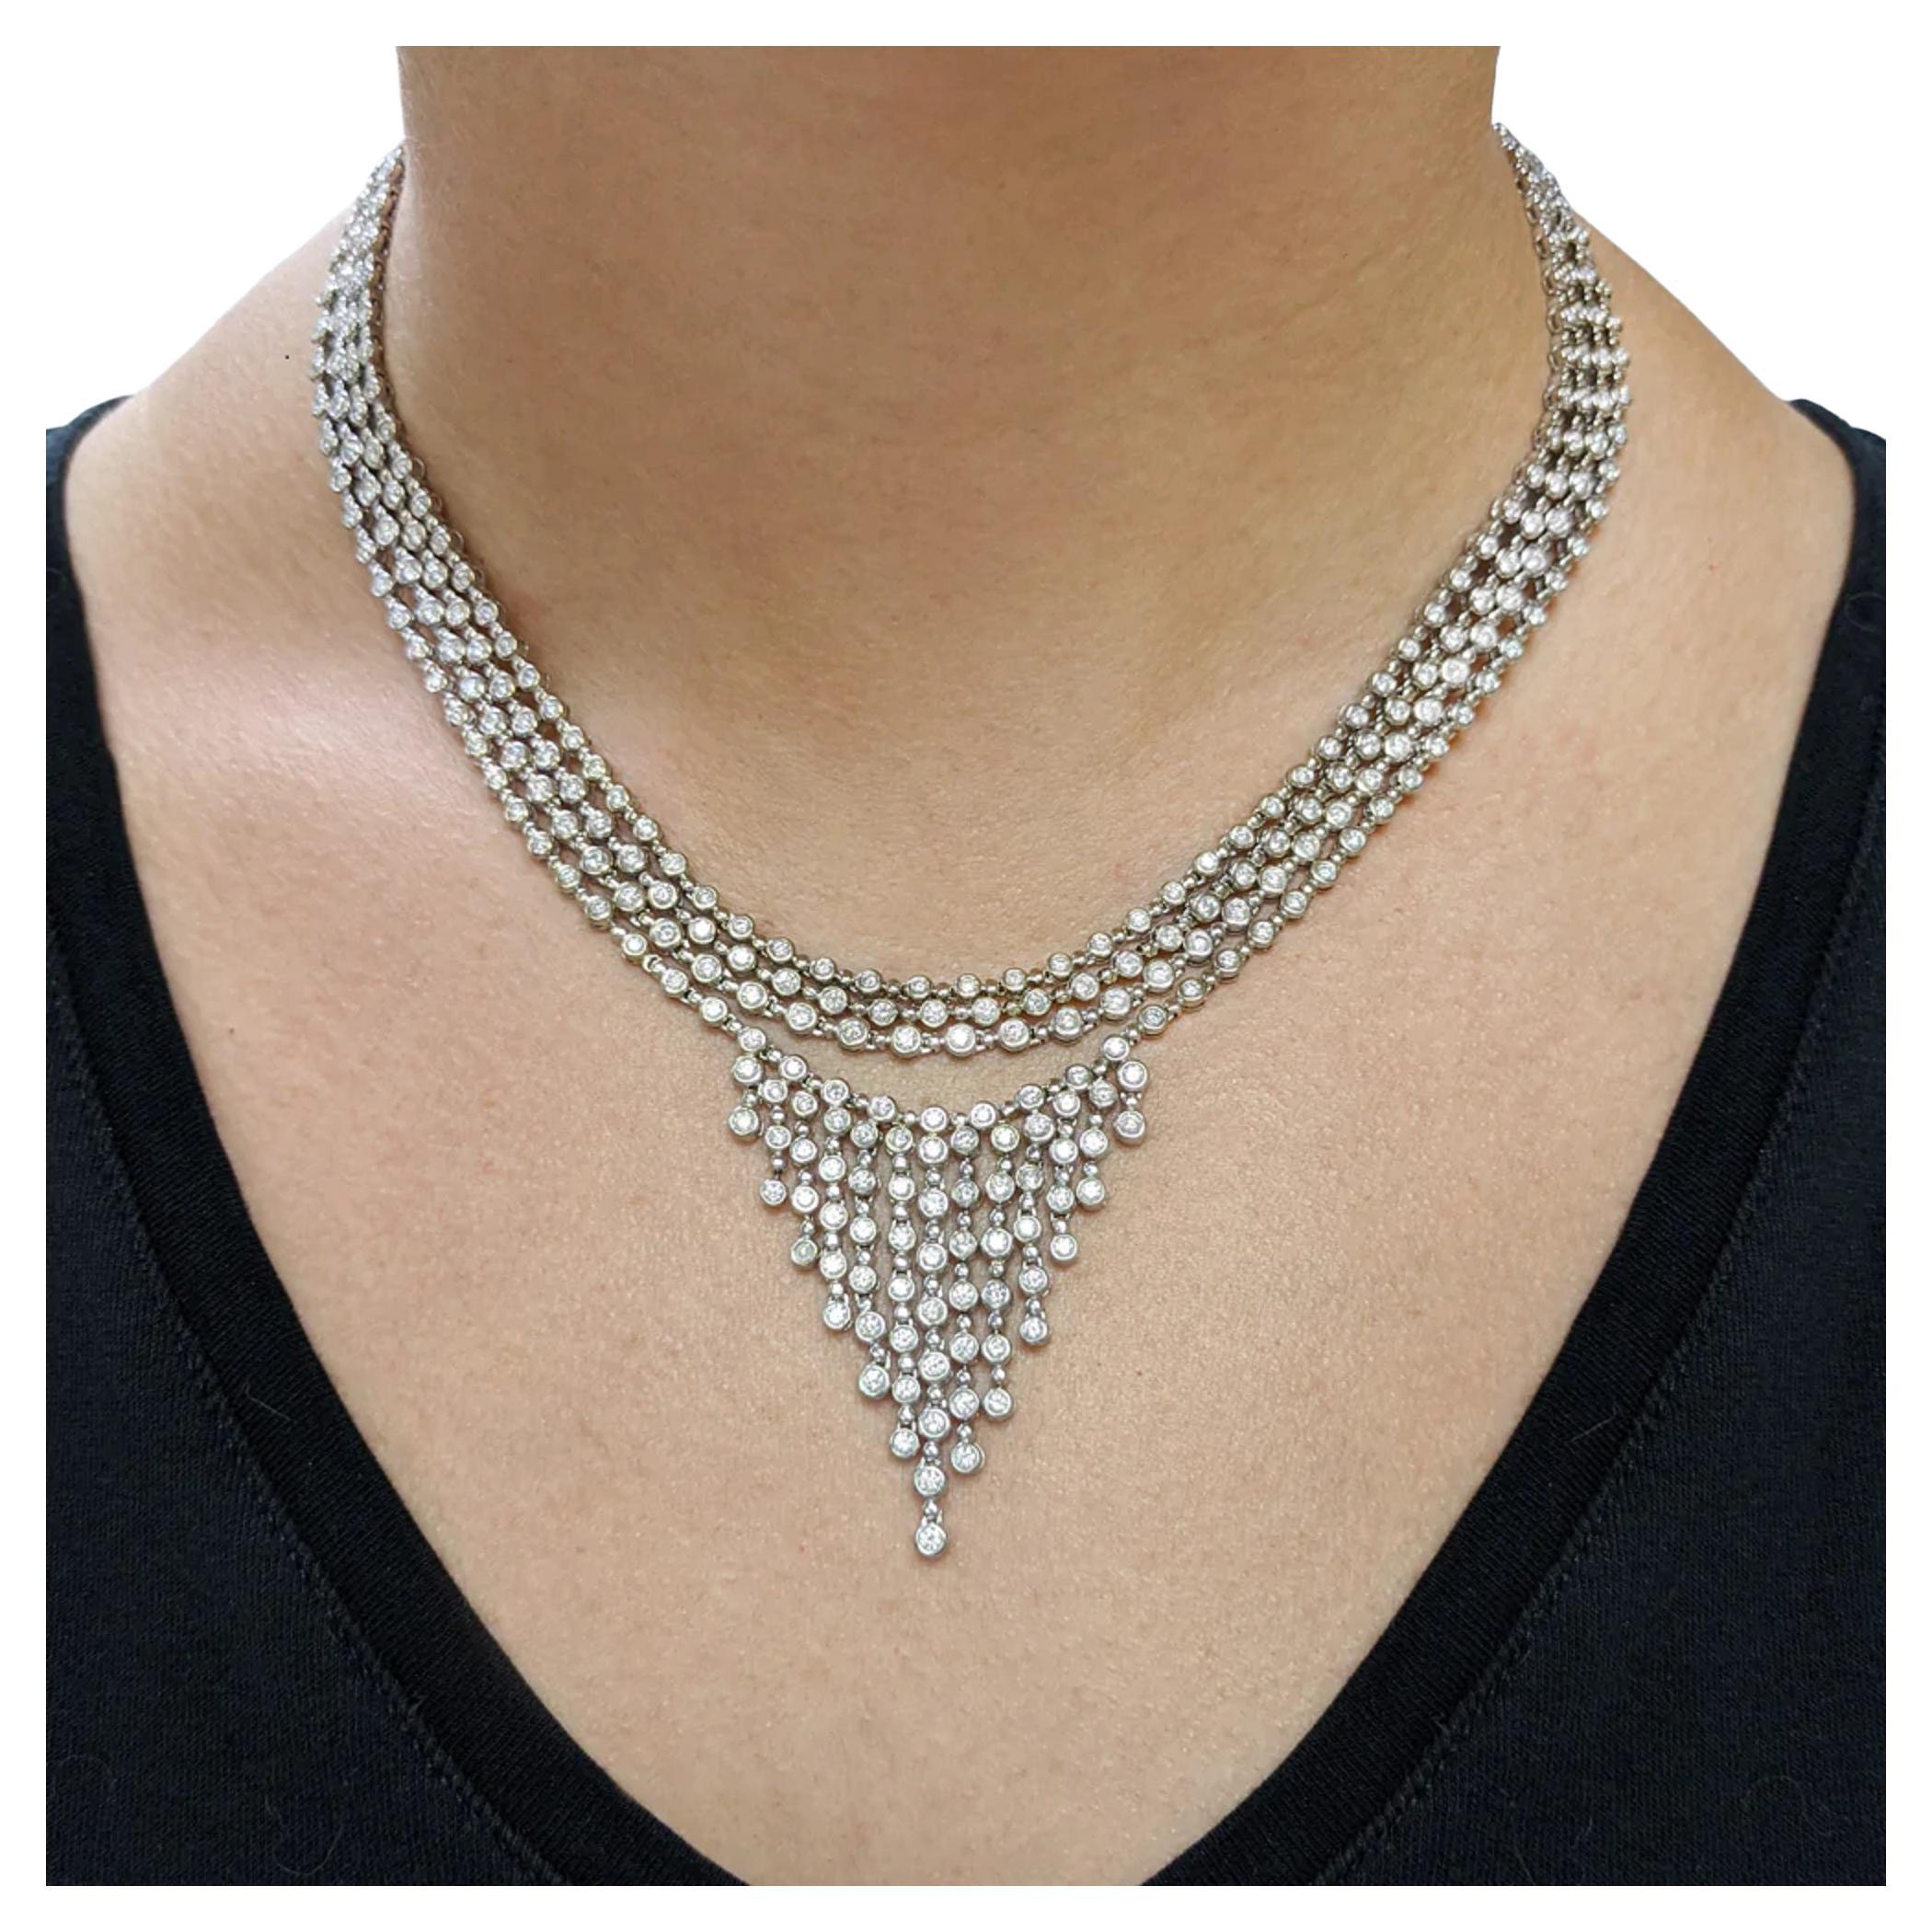 Exquisite 19.20 Carat Round Brilliant Cut Diamond High Luxury Necklace For Sale